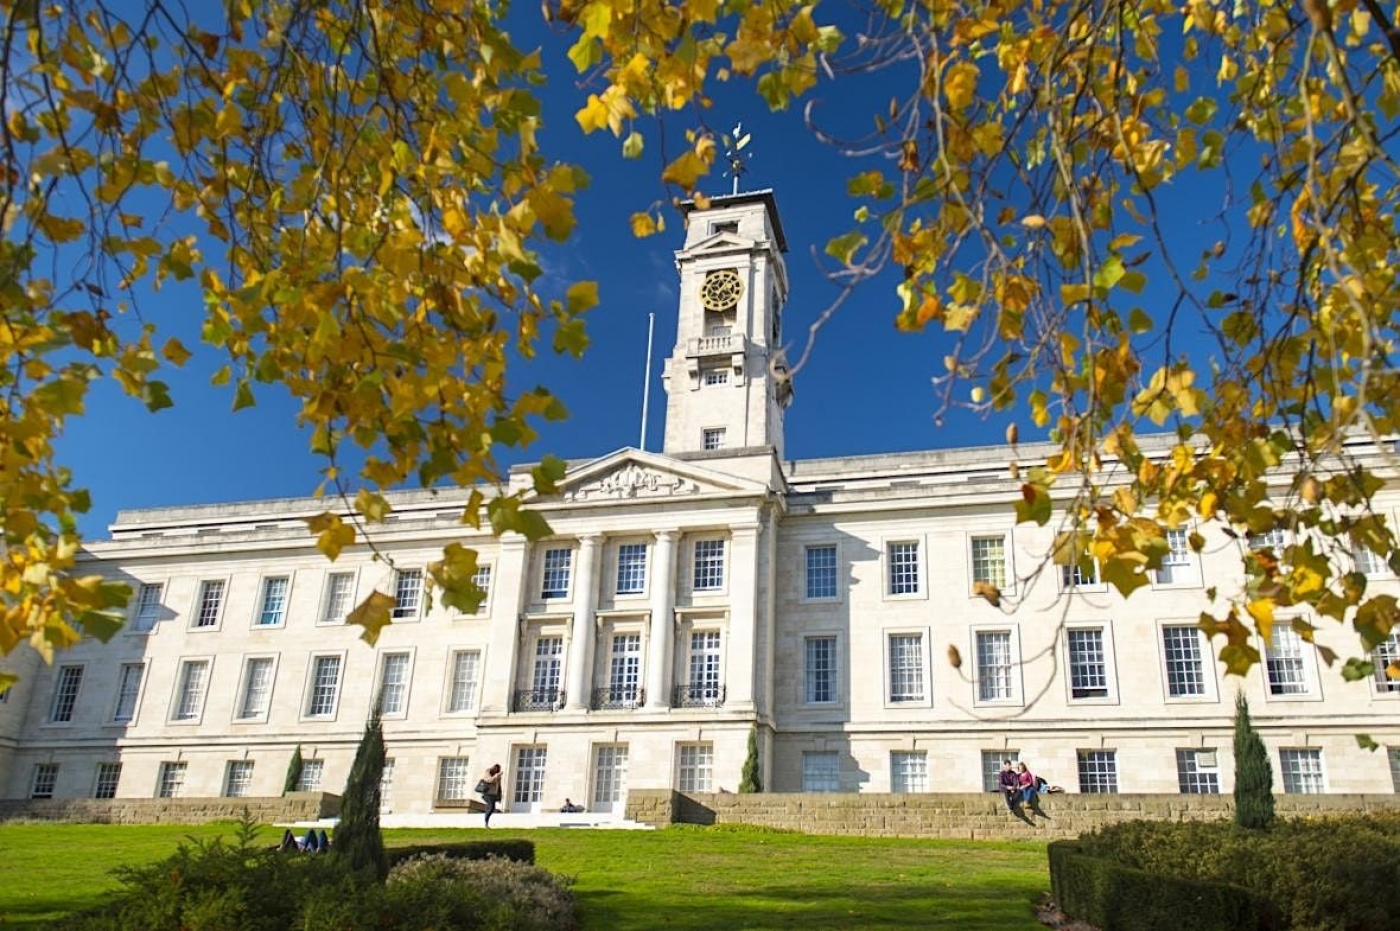 University of Nottingham - University Park Campus